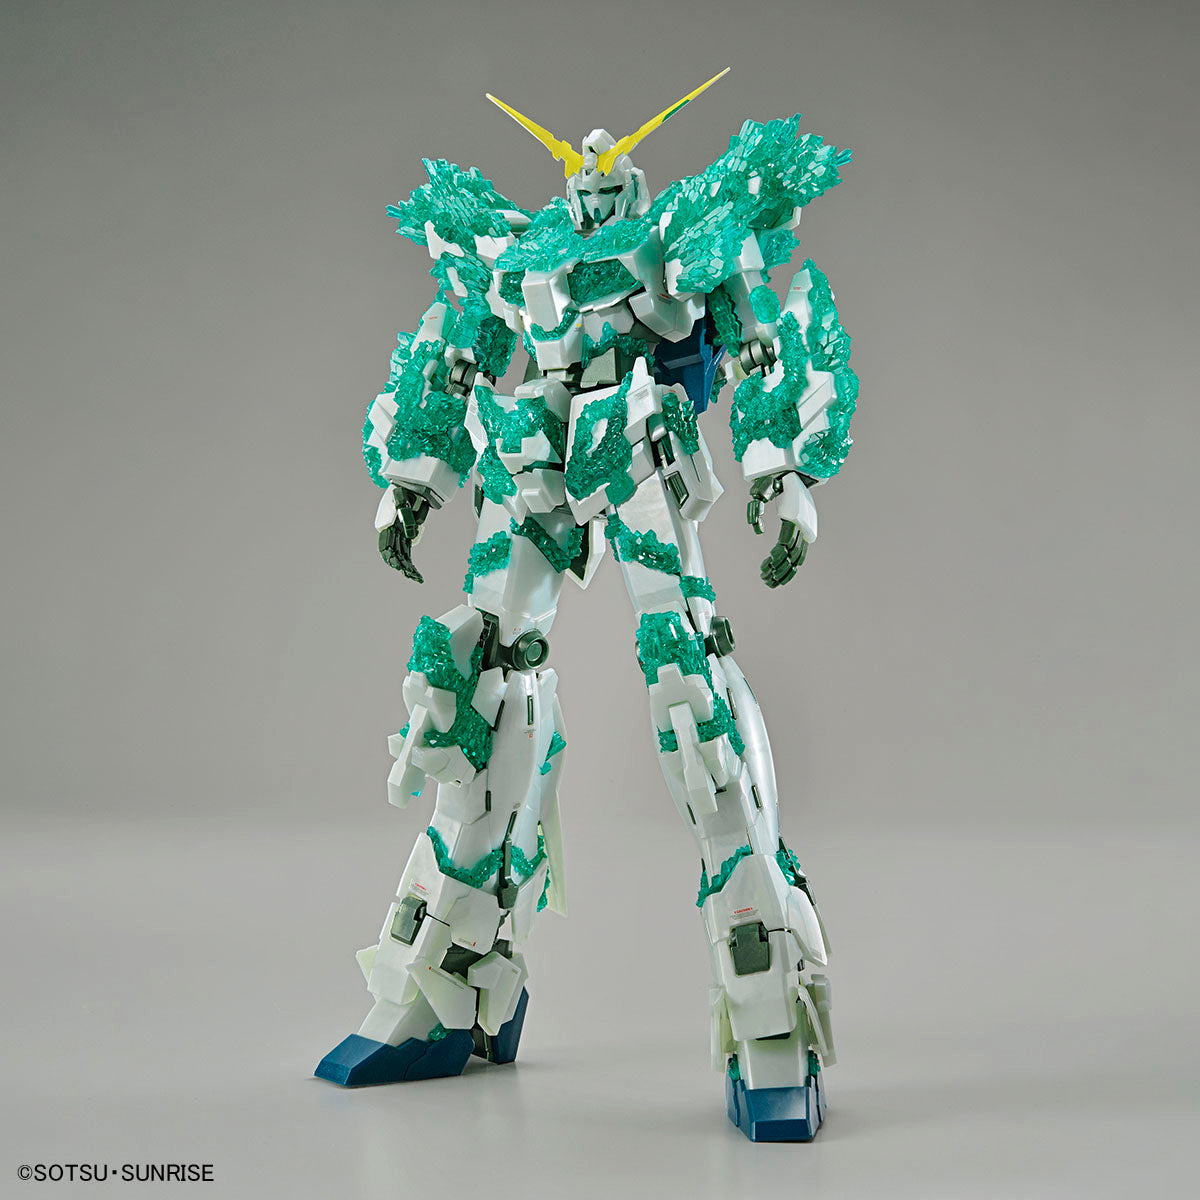 MG 1/100 Gundam Base Limited Unicorn Gundam [Luminous Crystal Body]